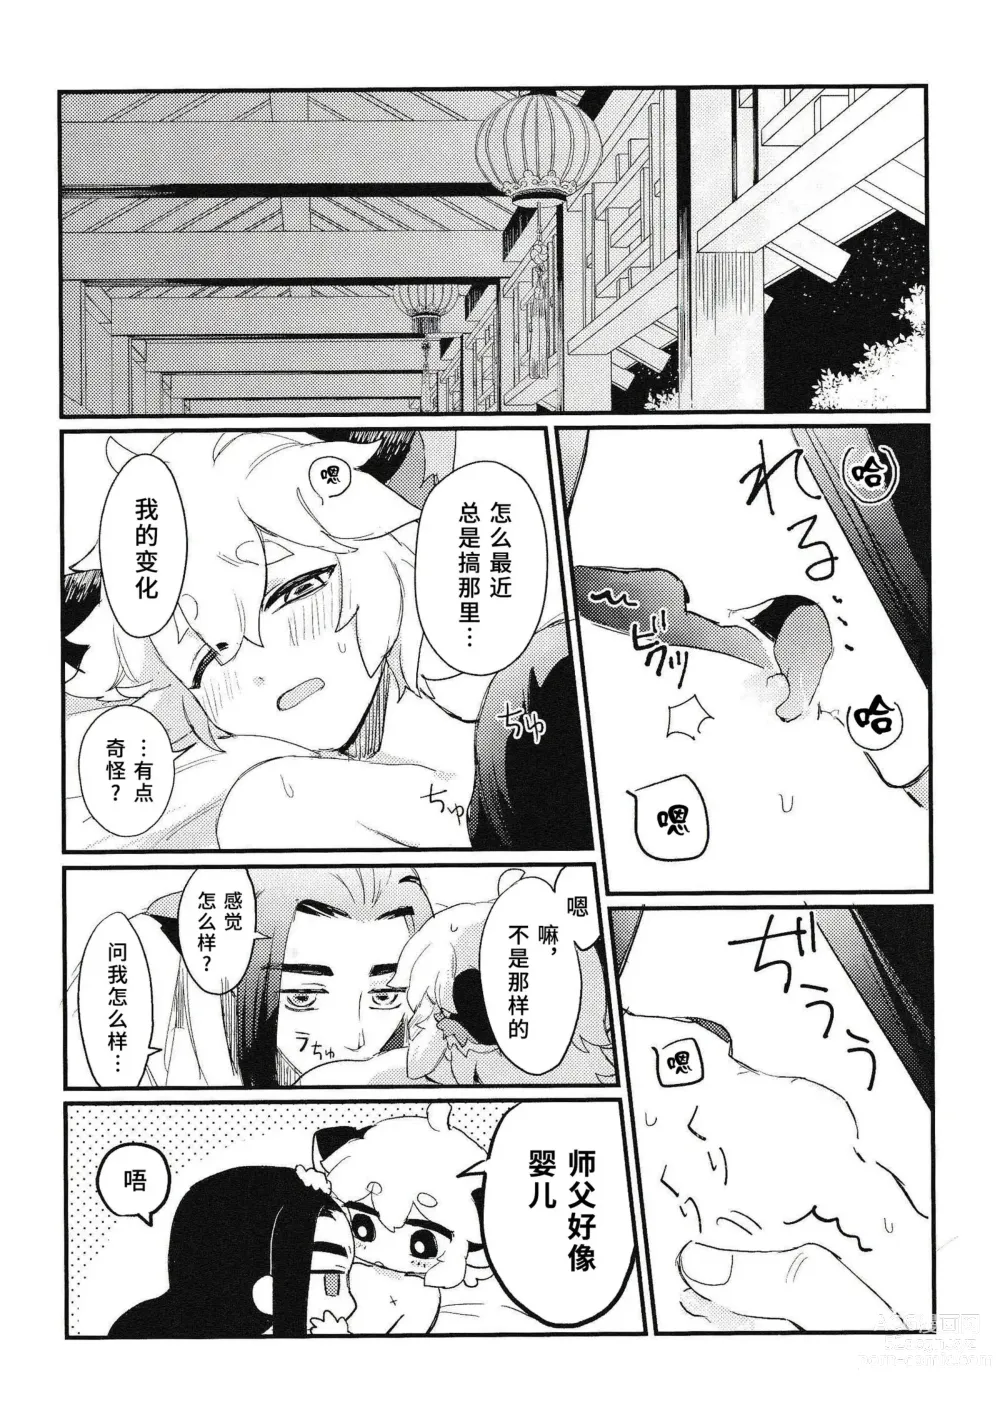 Page 12 of doujinshi 互相依偎她身体